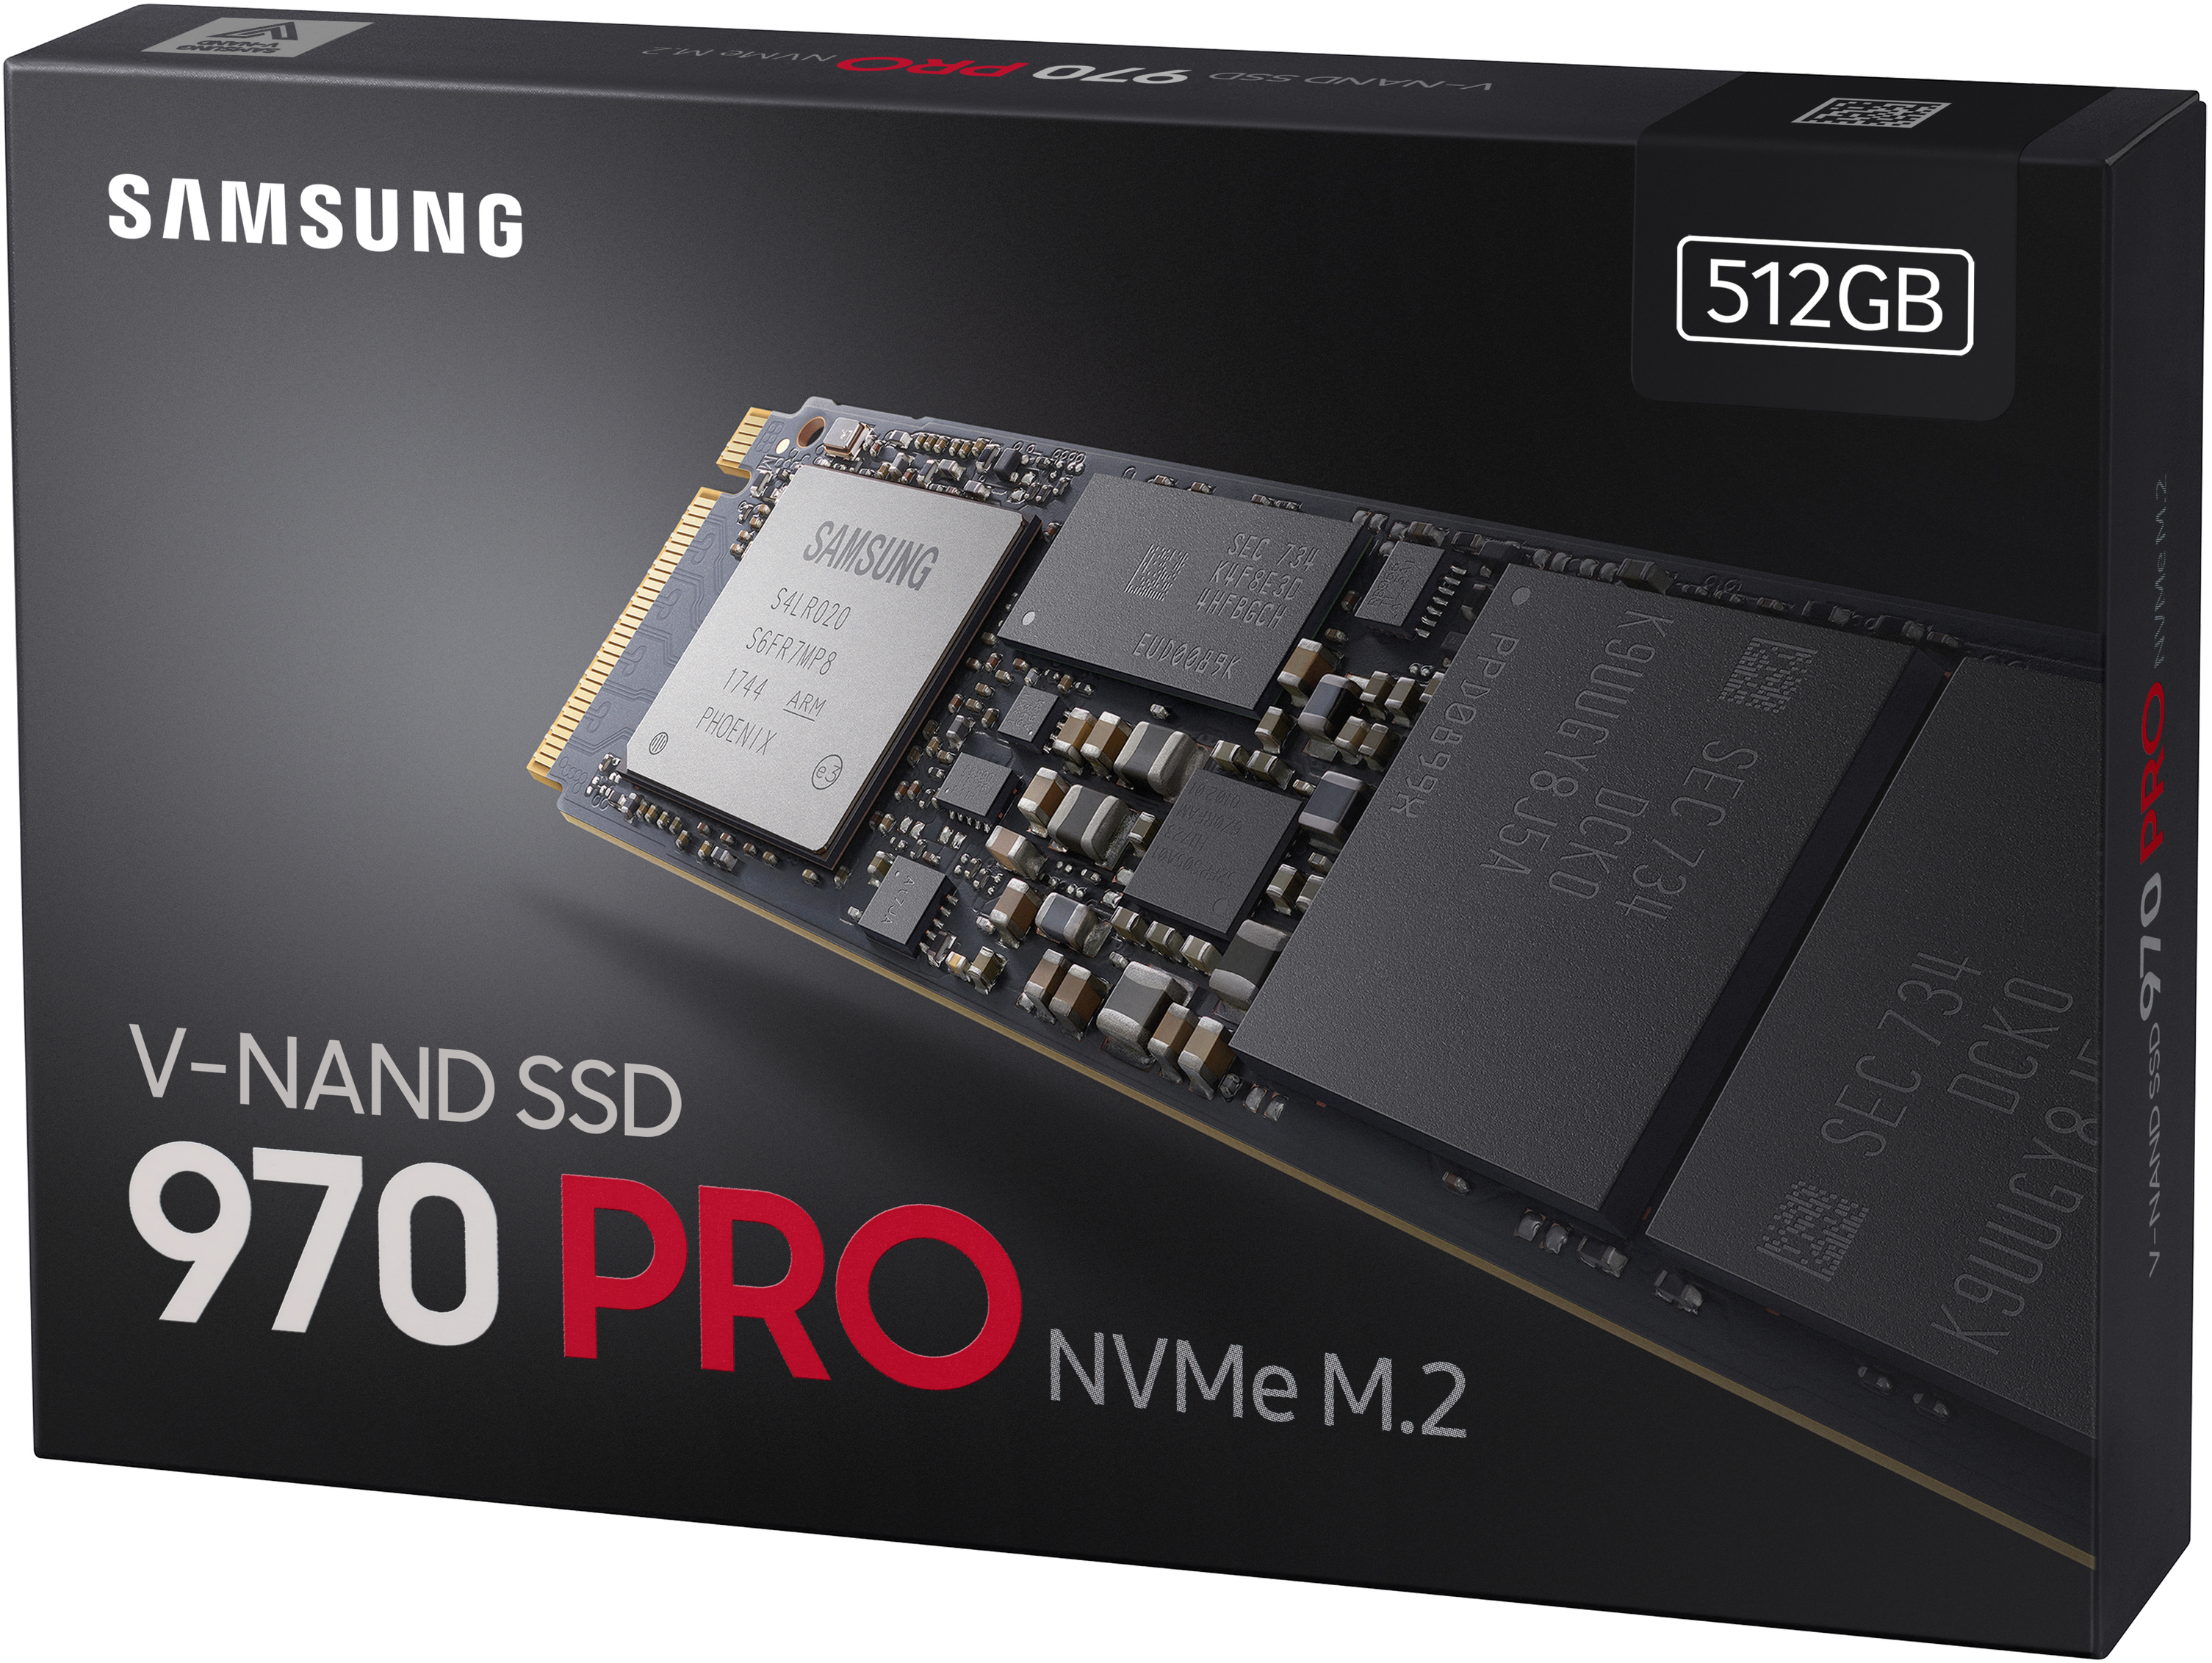 SSD Retail, GB Festplatte Pro 970 intern 512 via SAMSUNG NVMe, M.2